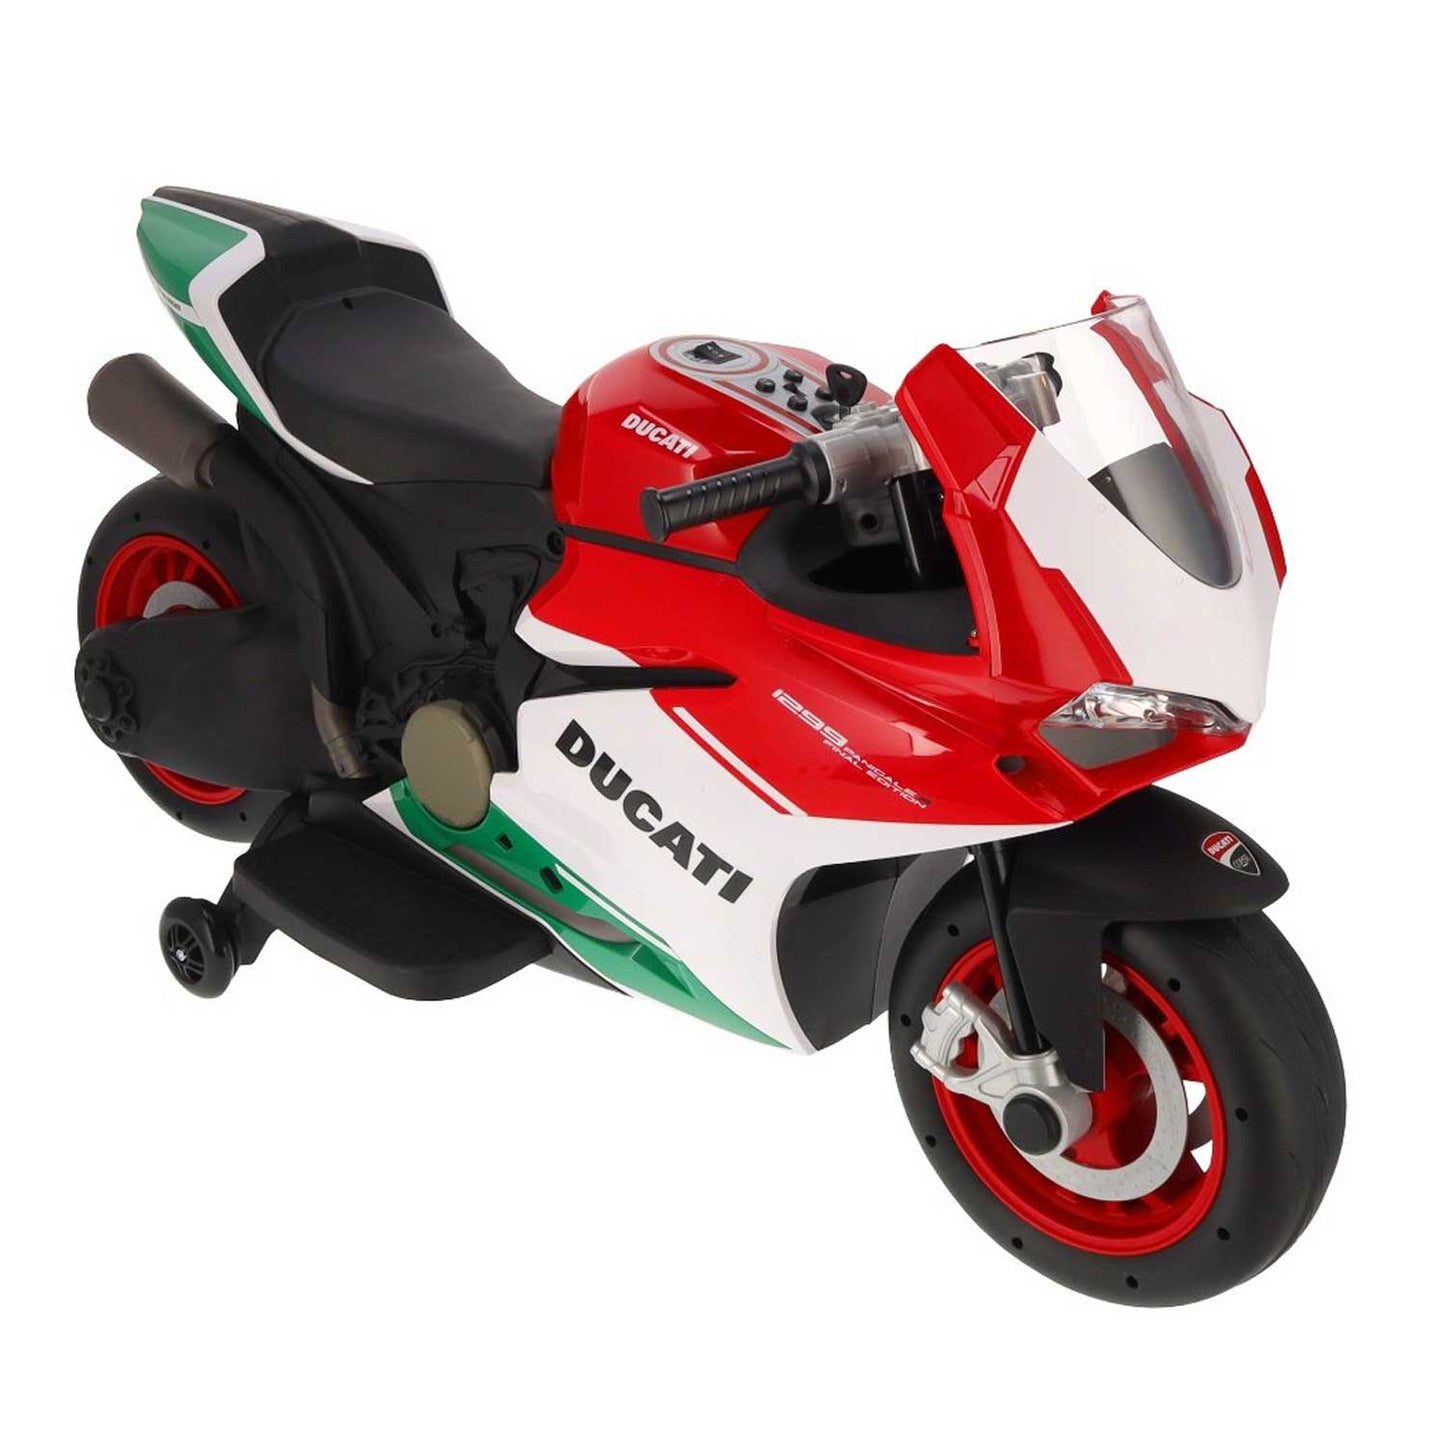 Globo - Ducati 1299 Panigale R12 Electric Motorcycle